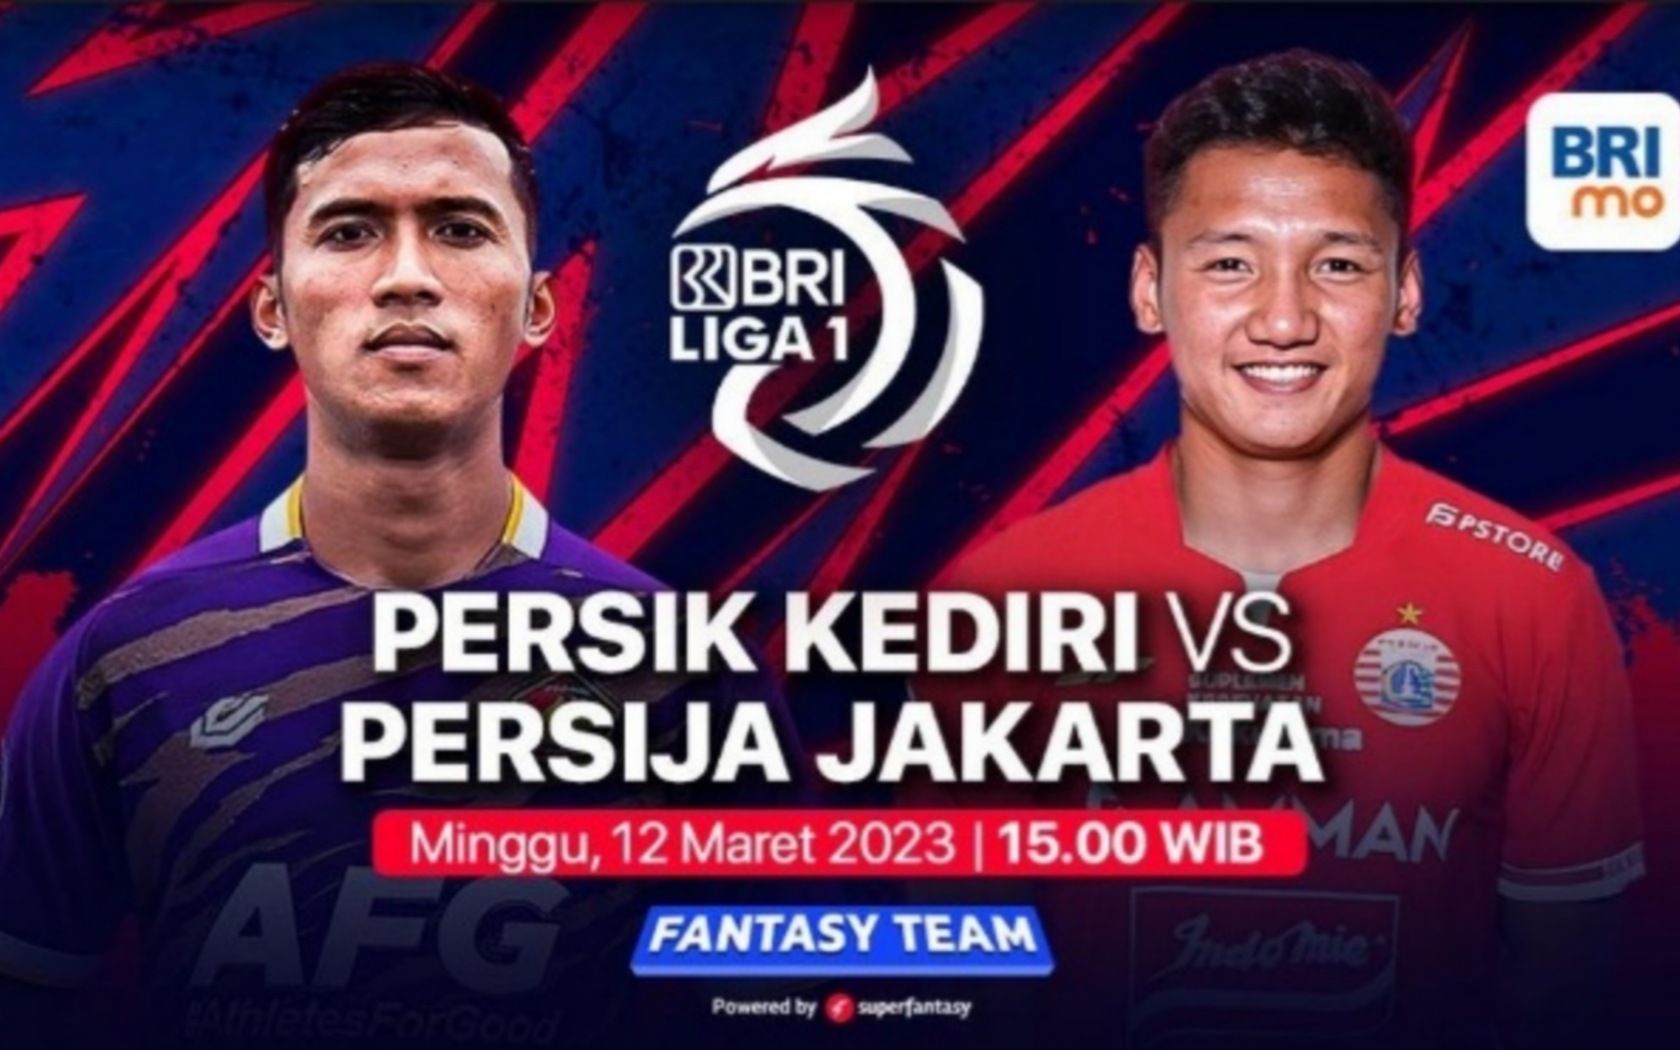 Prediksi Persik kediri vs Persija Jakarta pertandingan BRI Liga 1 2023